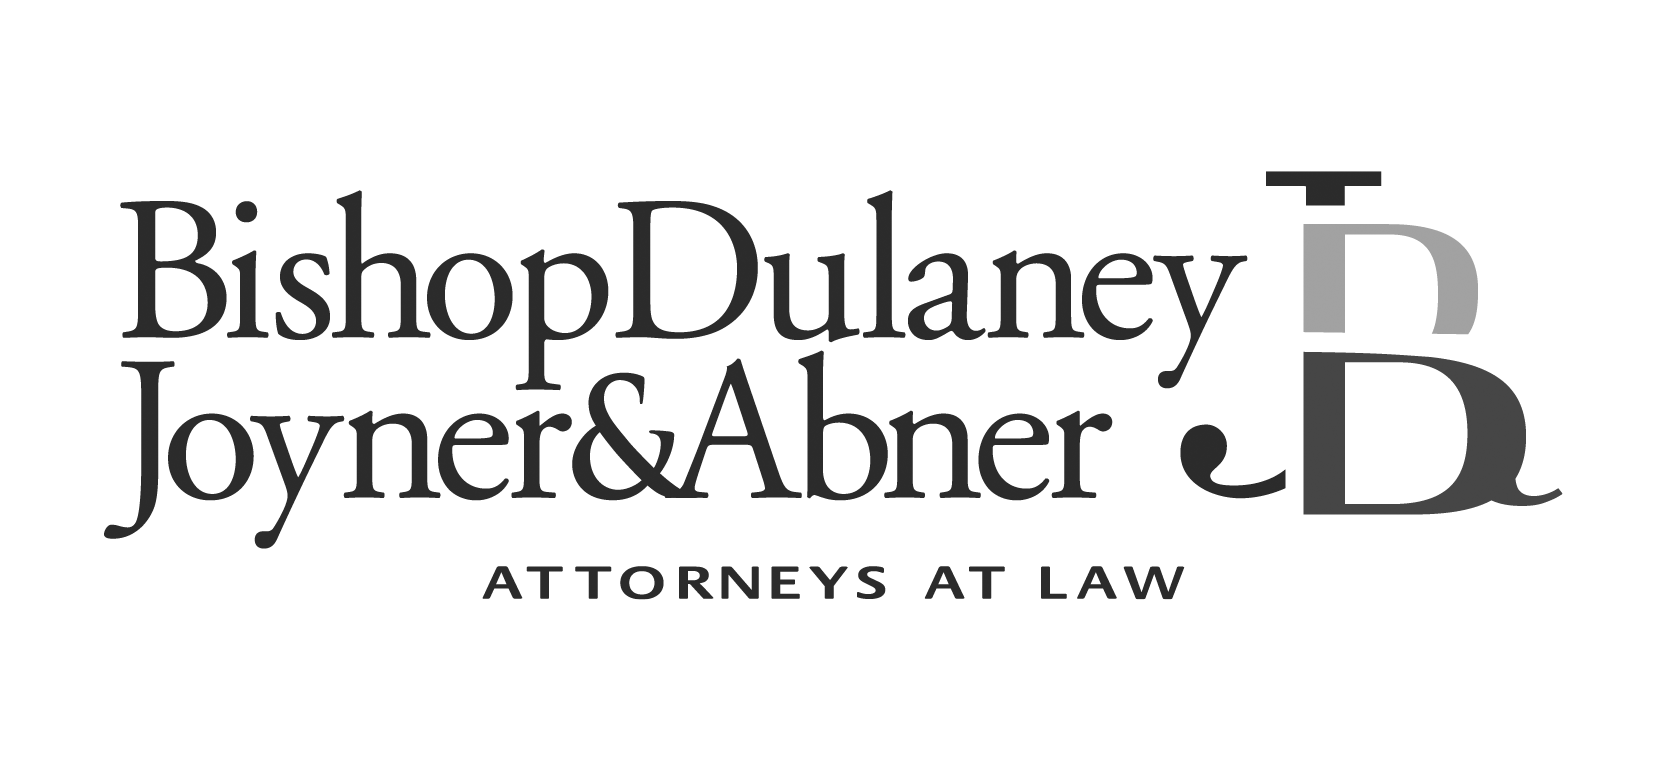 Bishop Dulaney Joyner & Abner logo